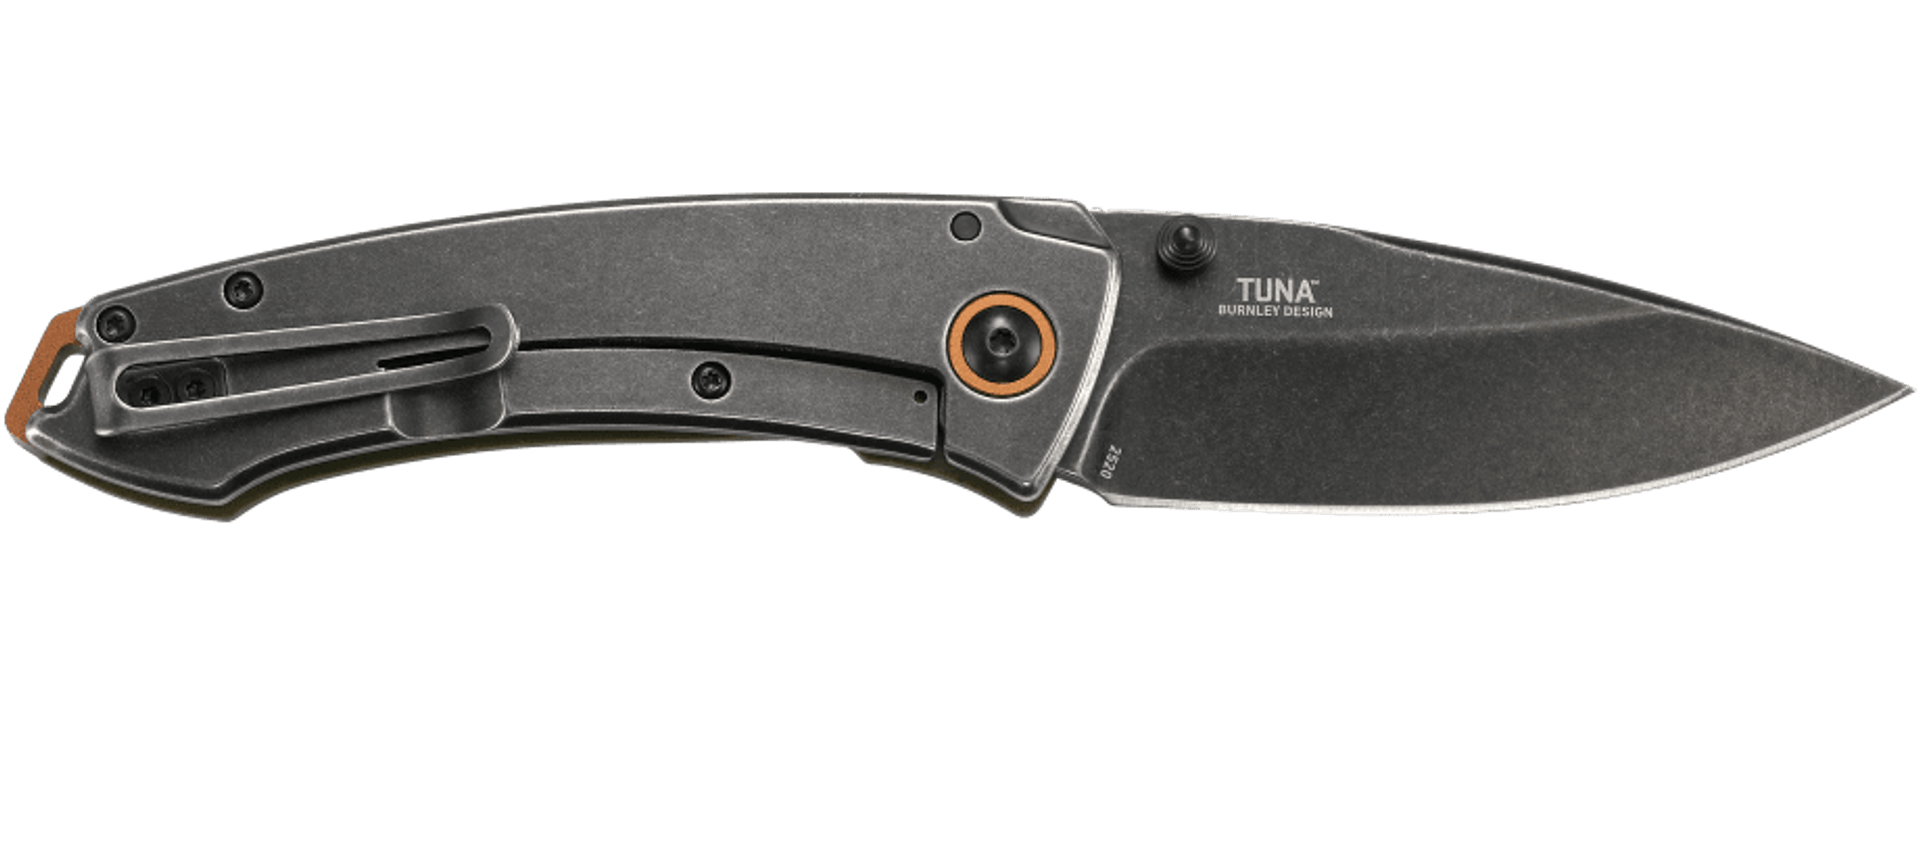 Tuna Frame Lock pocket knife